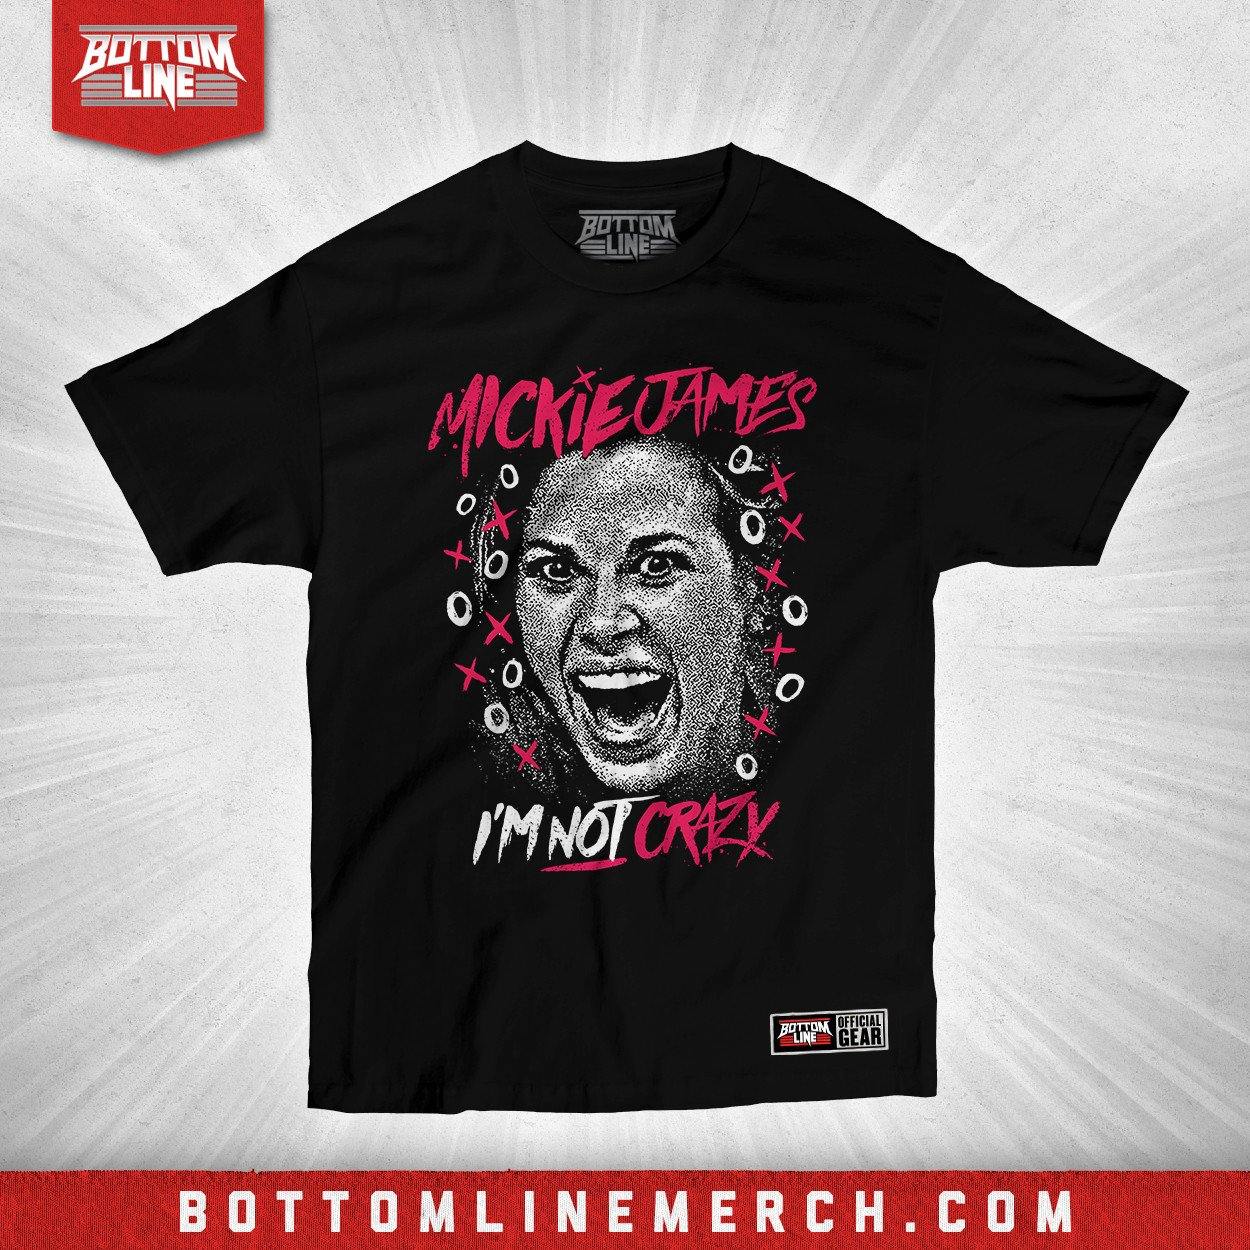 Buy Now – Mickie James "I'm Not Crazy" Shirt – Wrestler & Wrestling Merch – Bottom Line